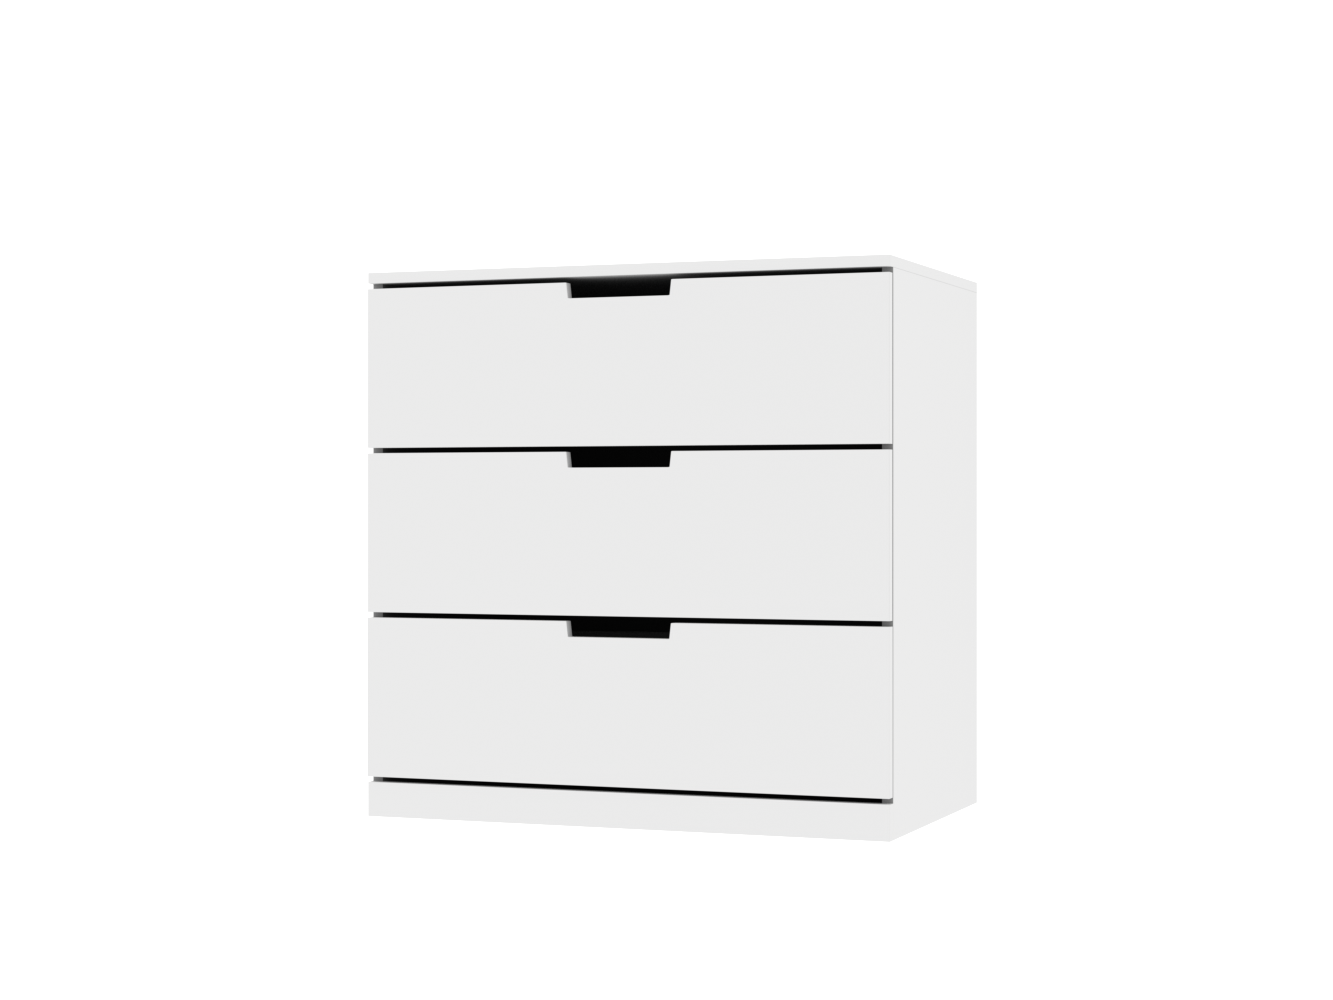 Изображение товара Комод Нордли 21 white ИКЕА (IKEA), 80x45x76 см на сайте adeta.ru